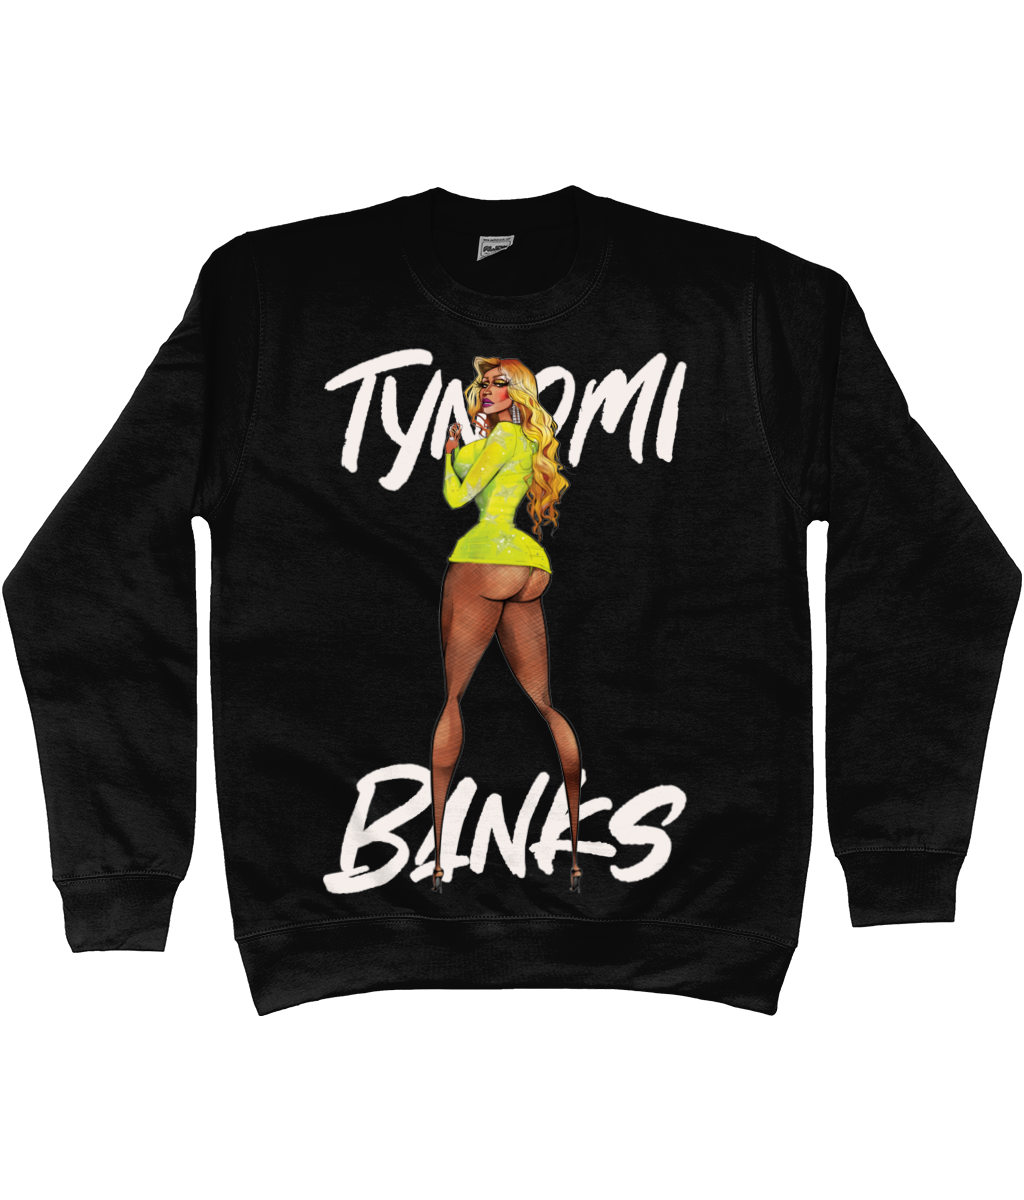 Tynomi Banks - Sweatshirt - SNATCHED MERCH